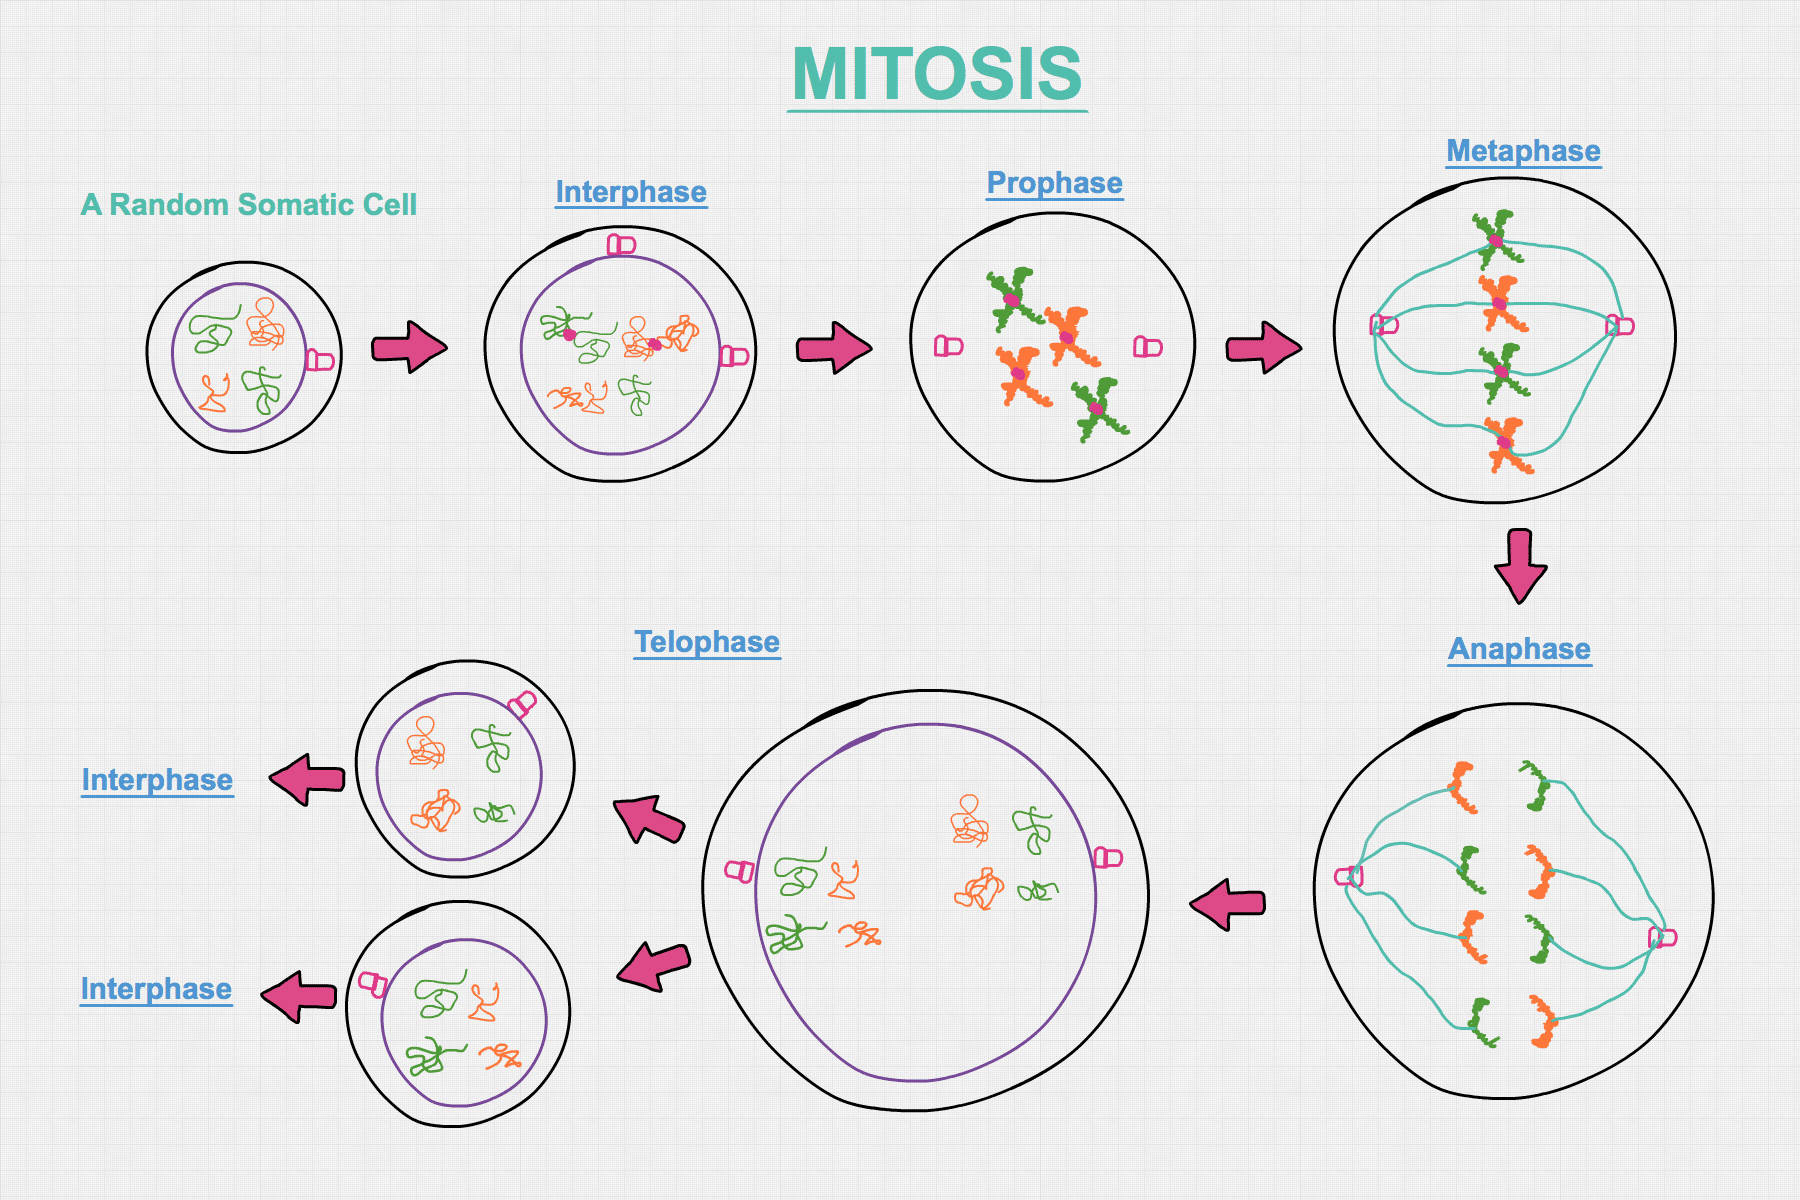 HSC-Biology-Mitosis-Diagram.png.